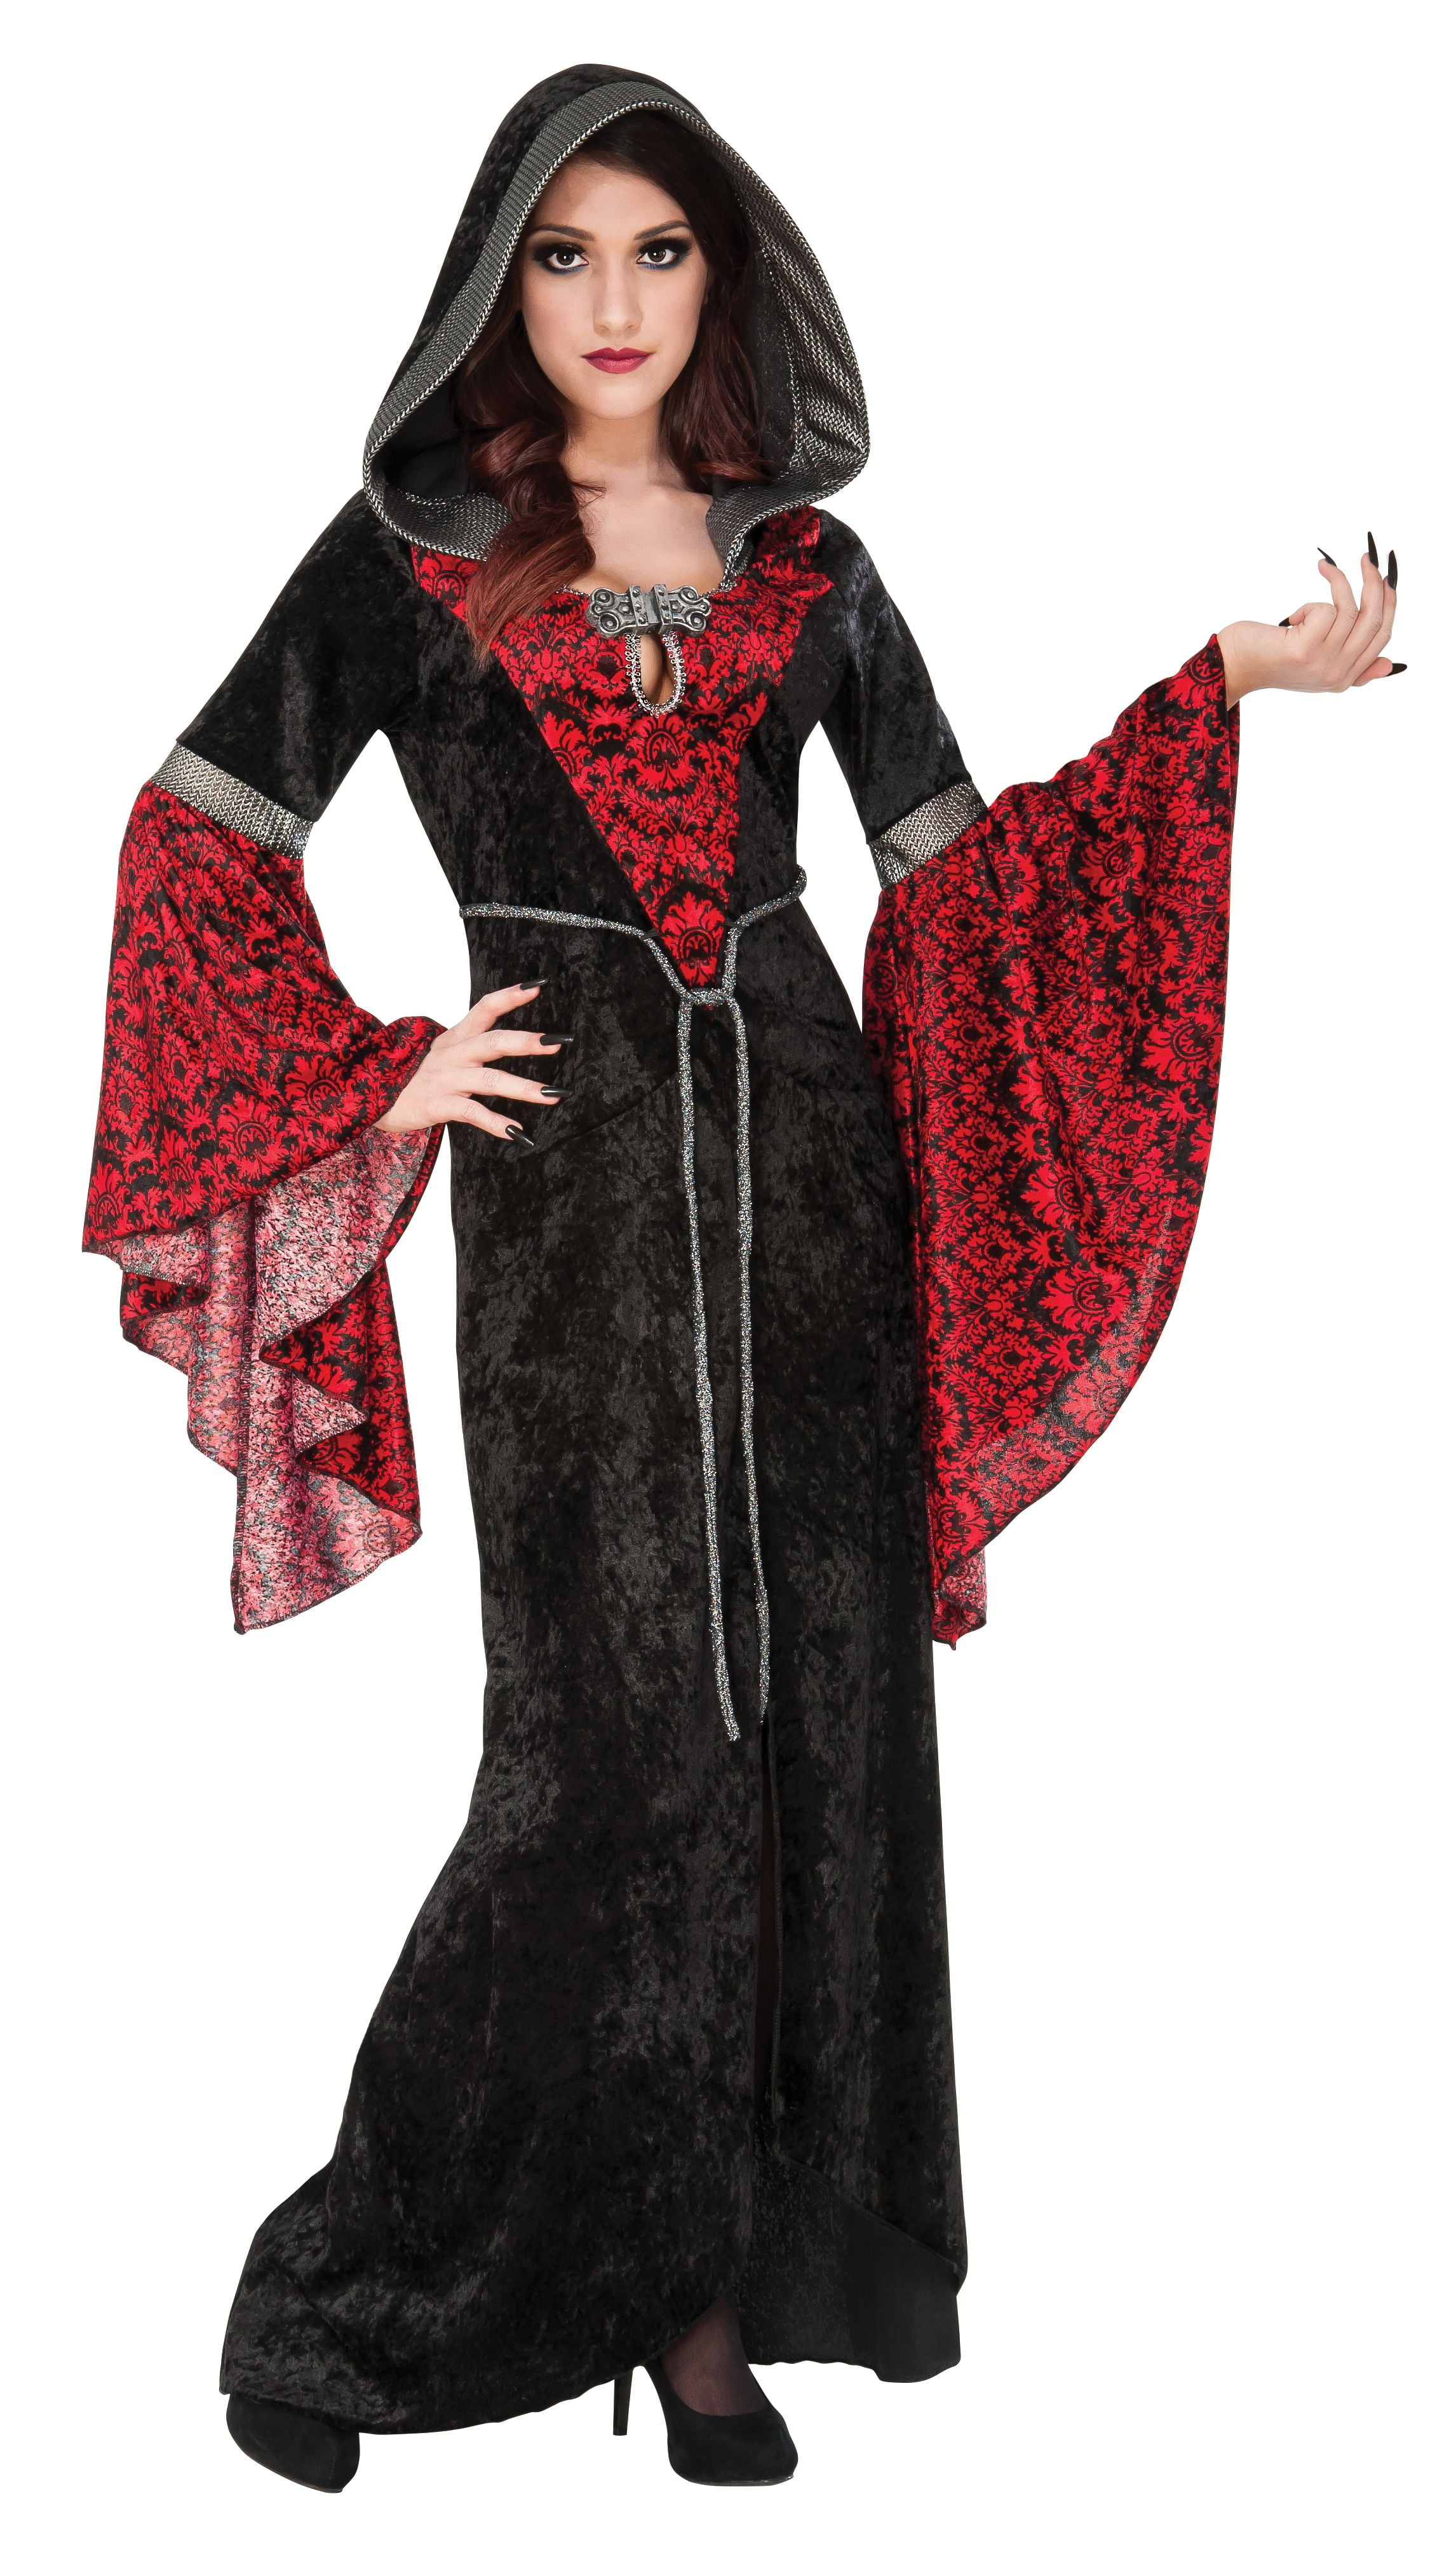 Vampiress Vampire Countess Crimson Adult Womens Costume Standard Size NEW